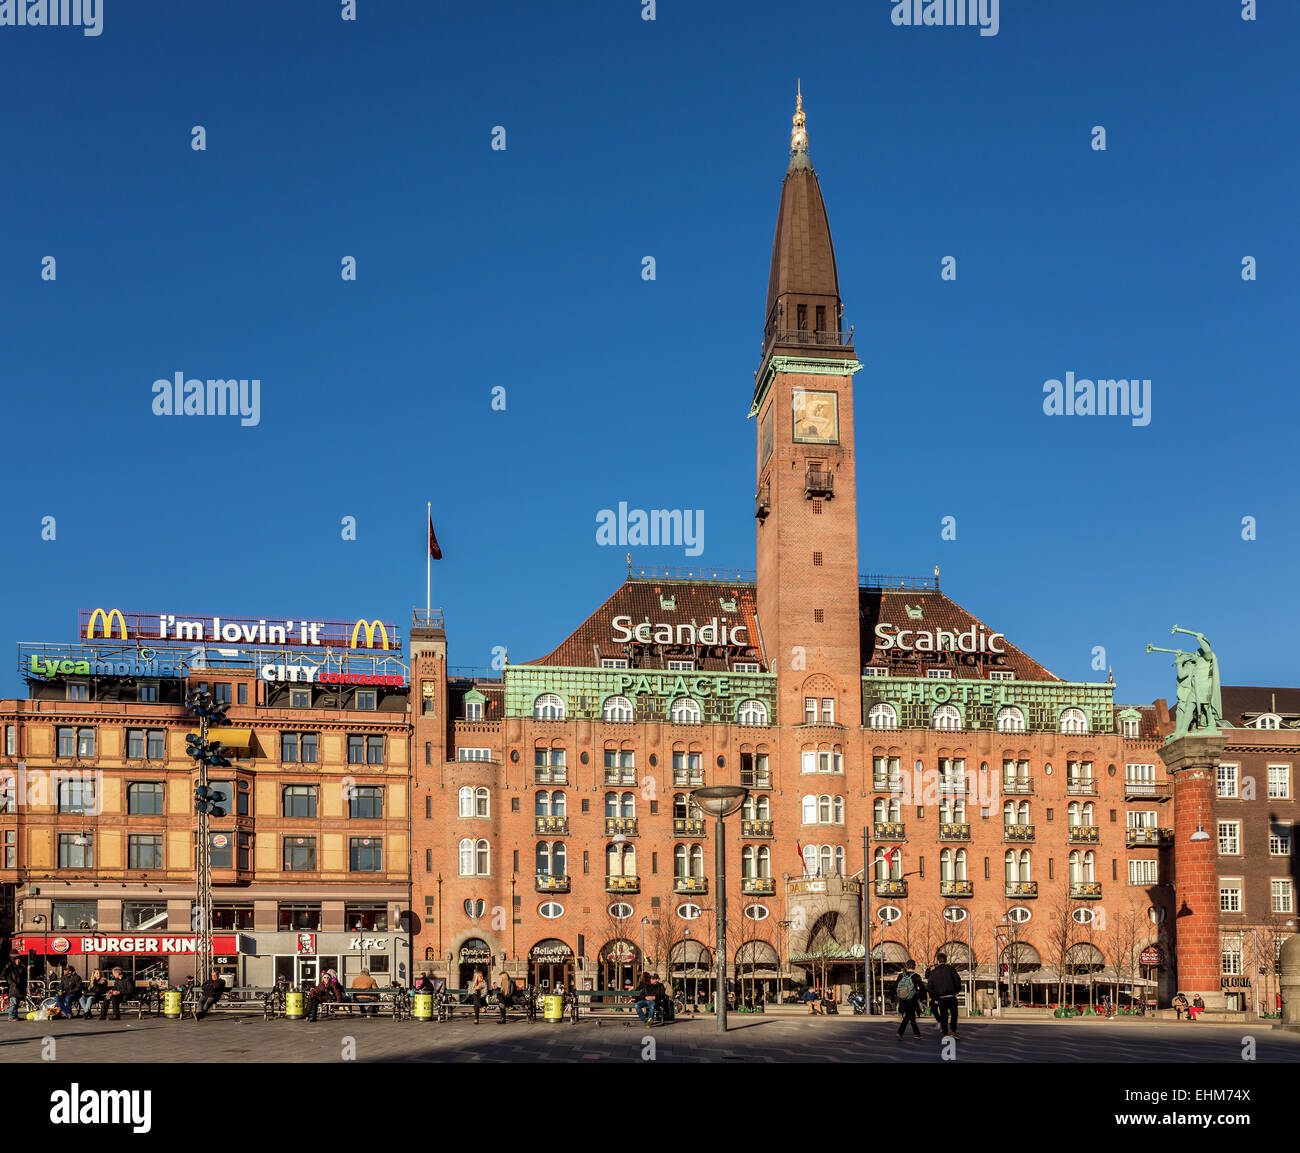 Scandic Palace Hotel on the Town Hall square, Radhus Pladsen, Copenhagen, Denmark Stock Photo